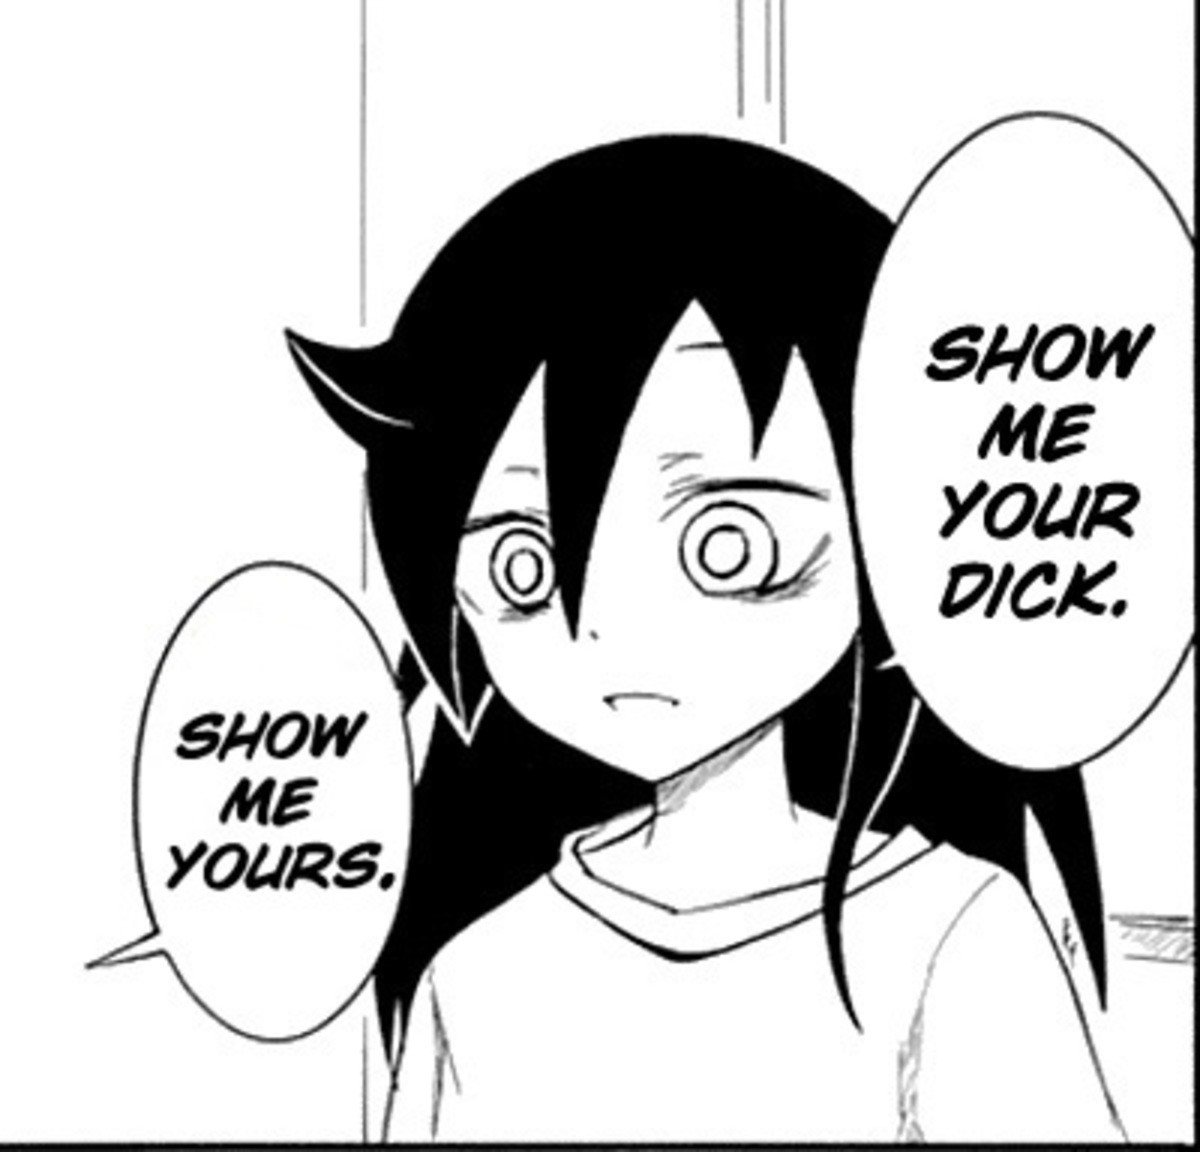 She wants the dick anime